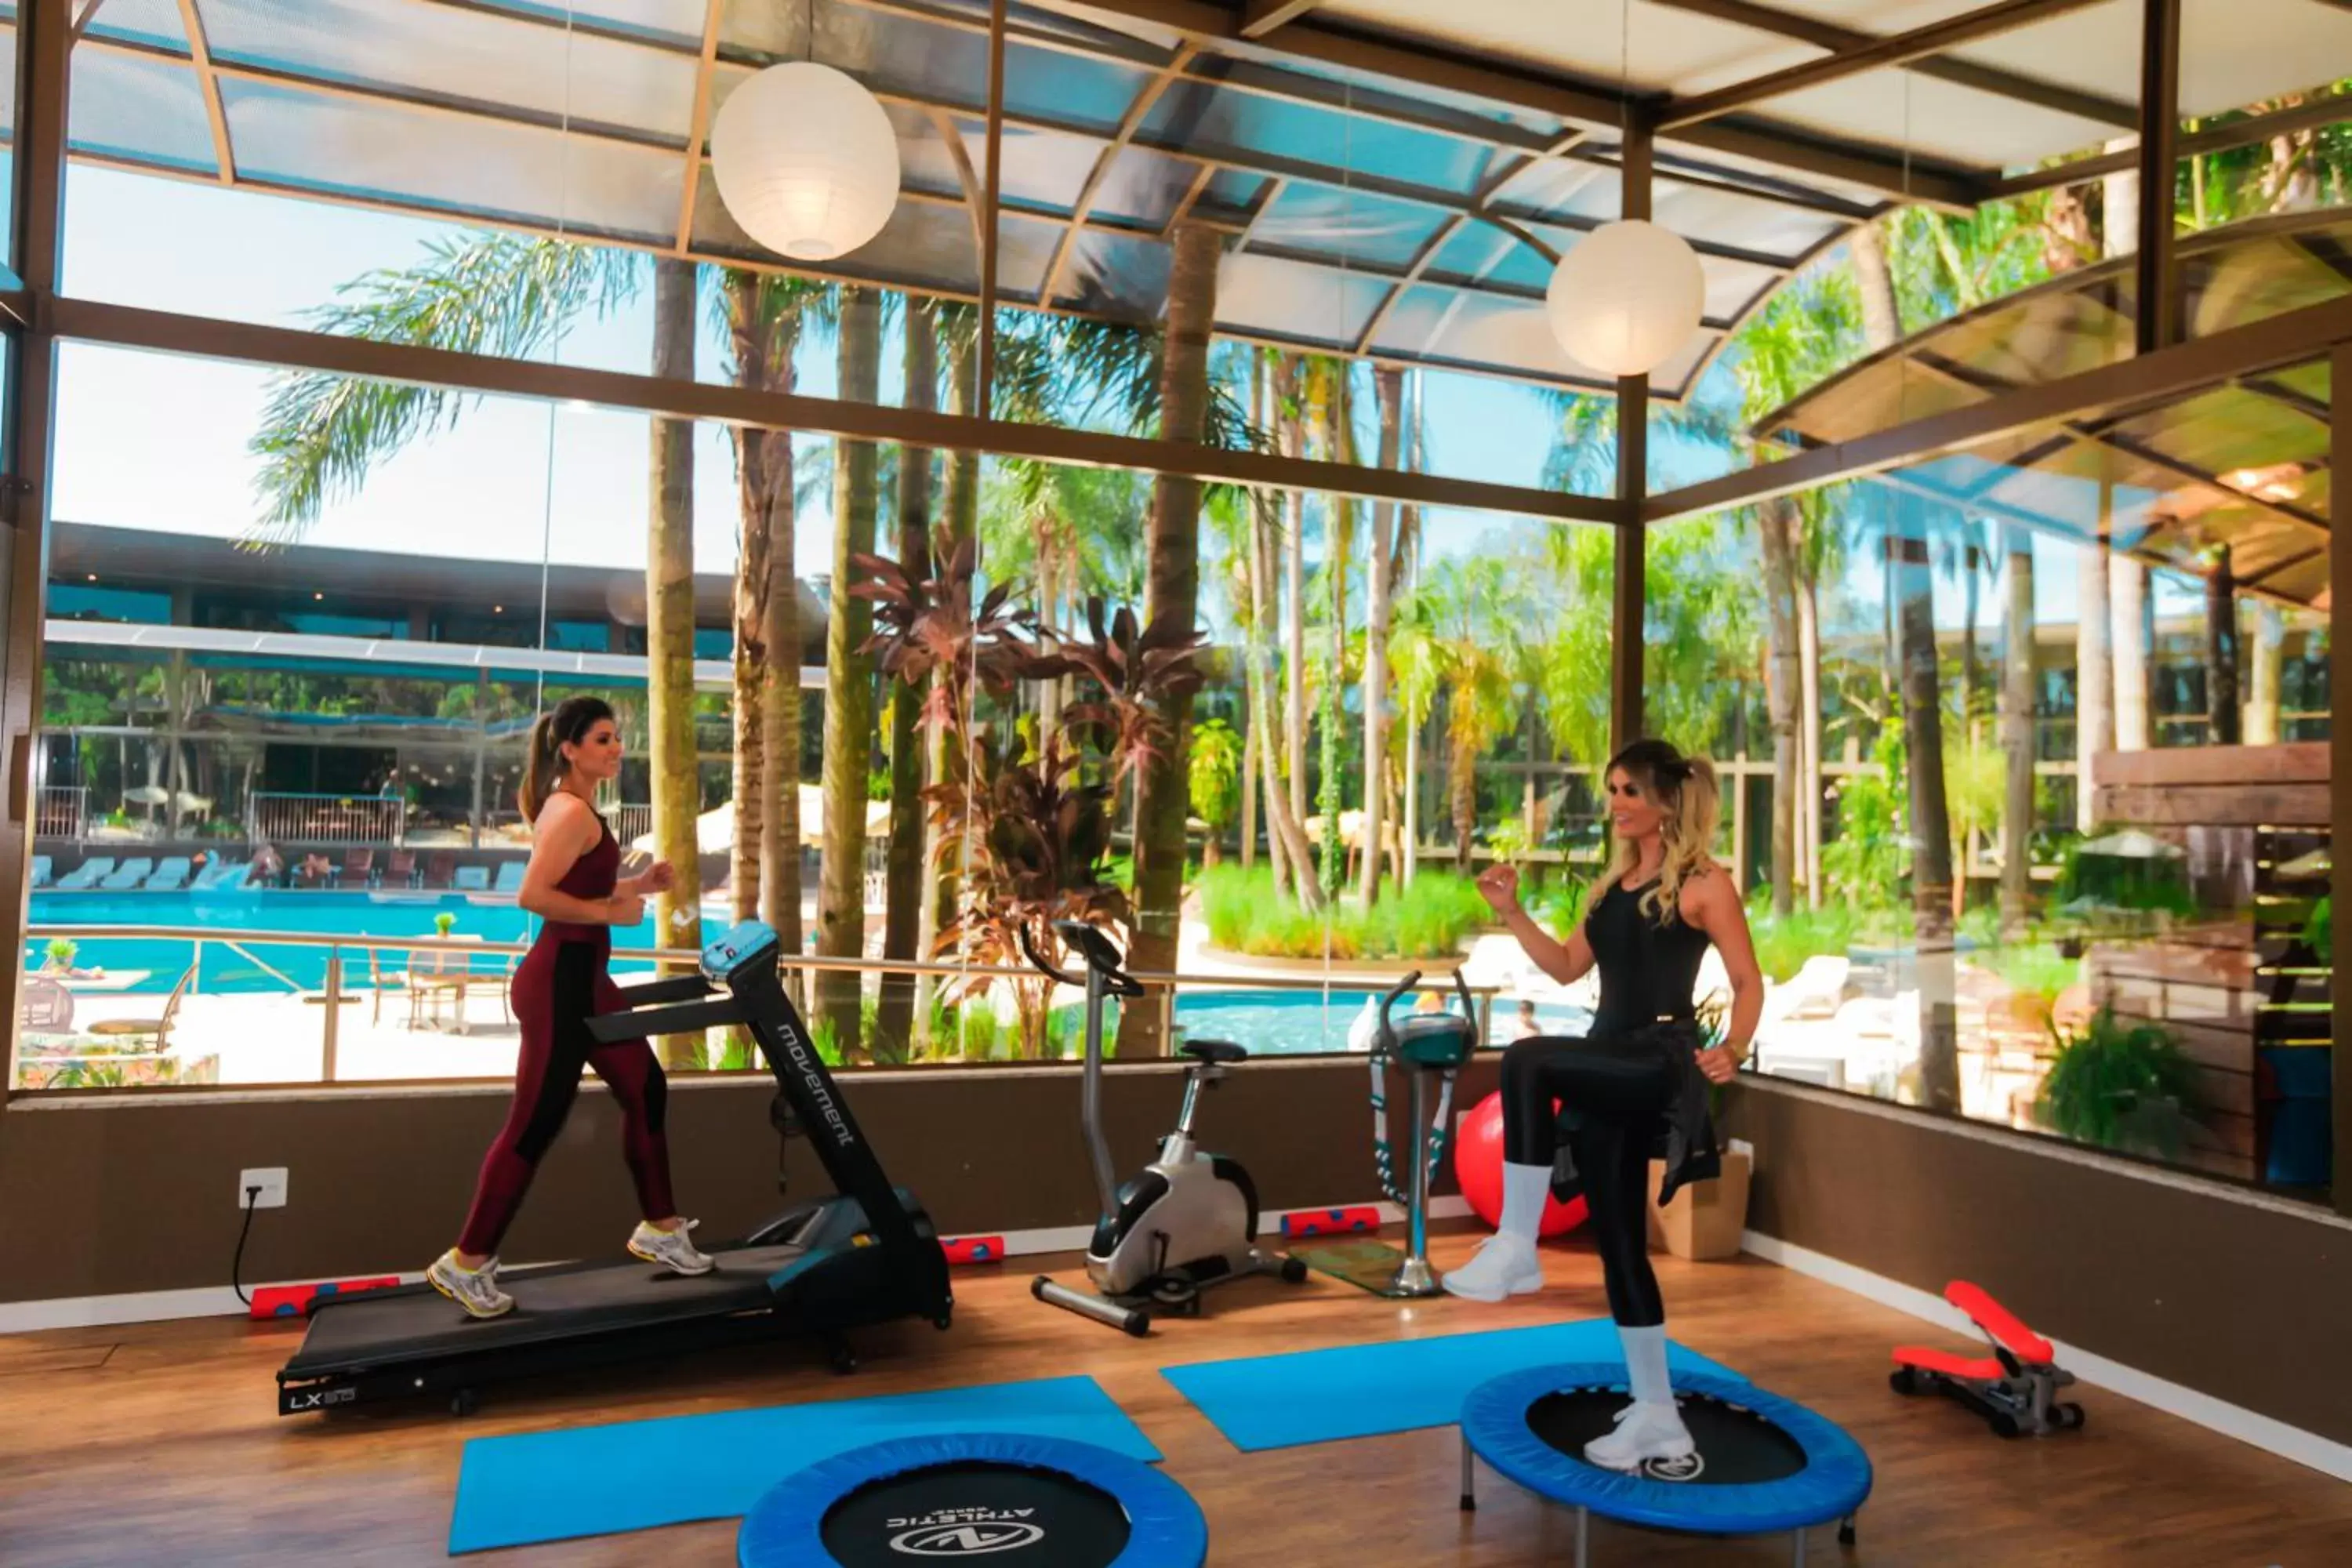 Fitness centre/facilities in Vivaz Cataratas Hotel Resort